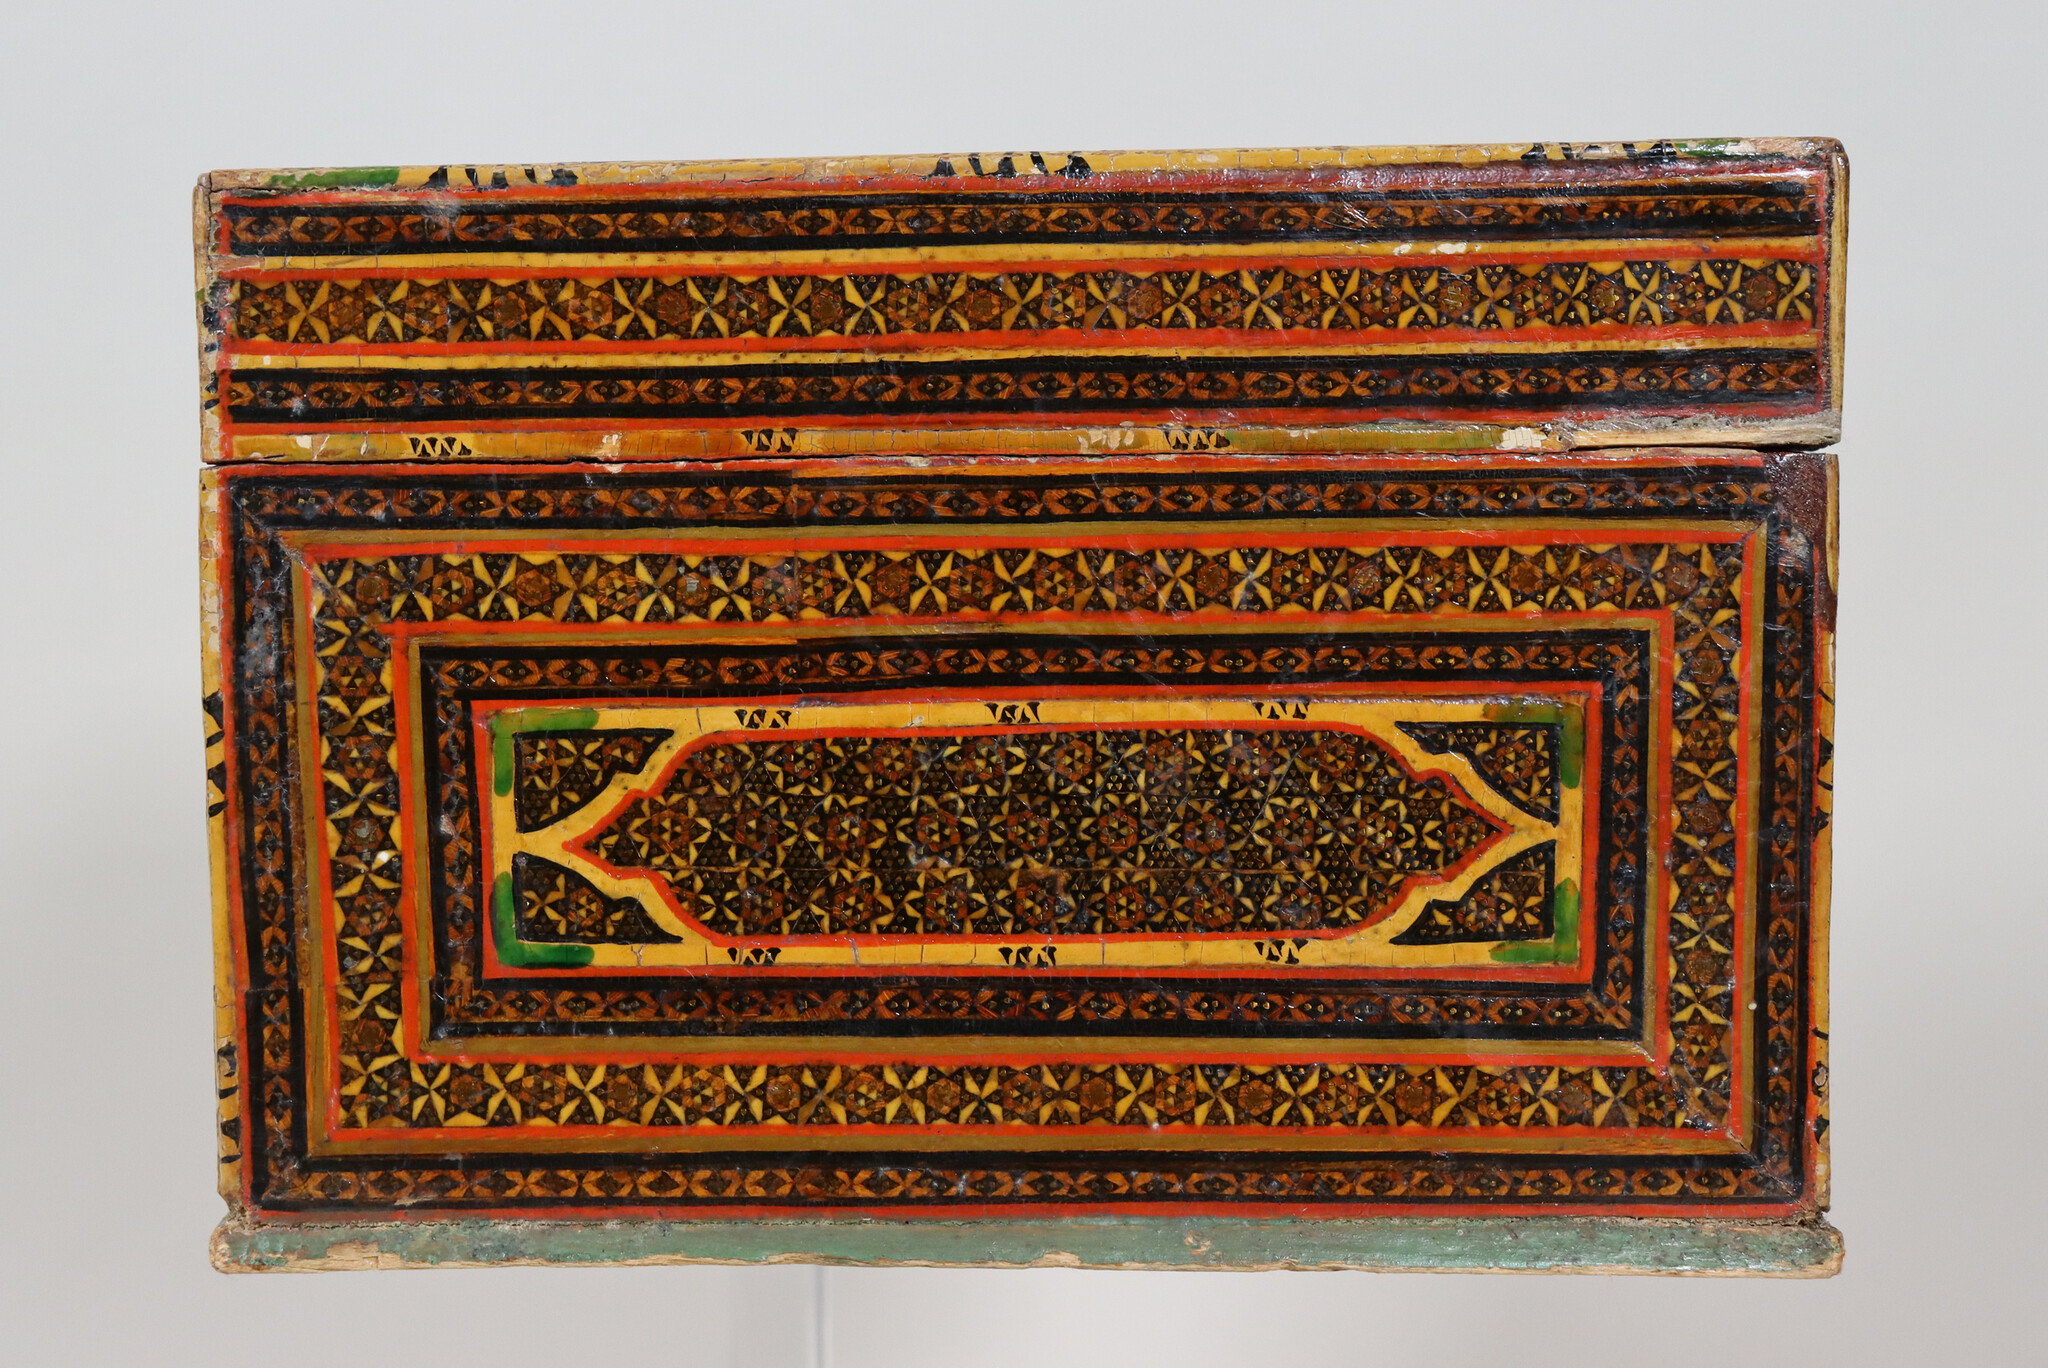 Antique Islamic Khatam Kari Chest Box cabinet, 18th/19th century No: C